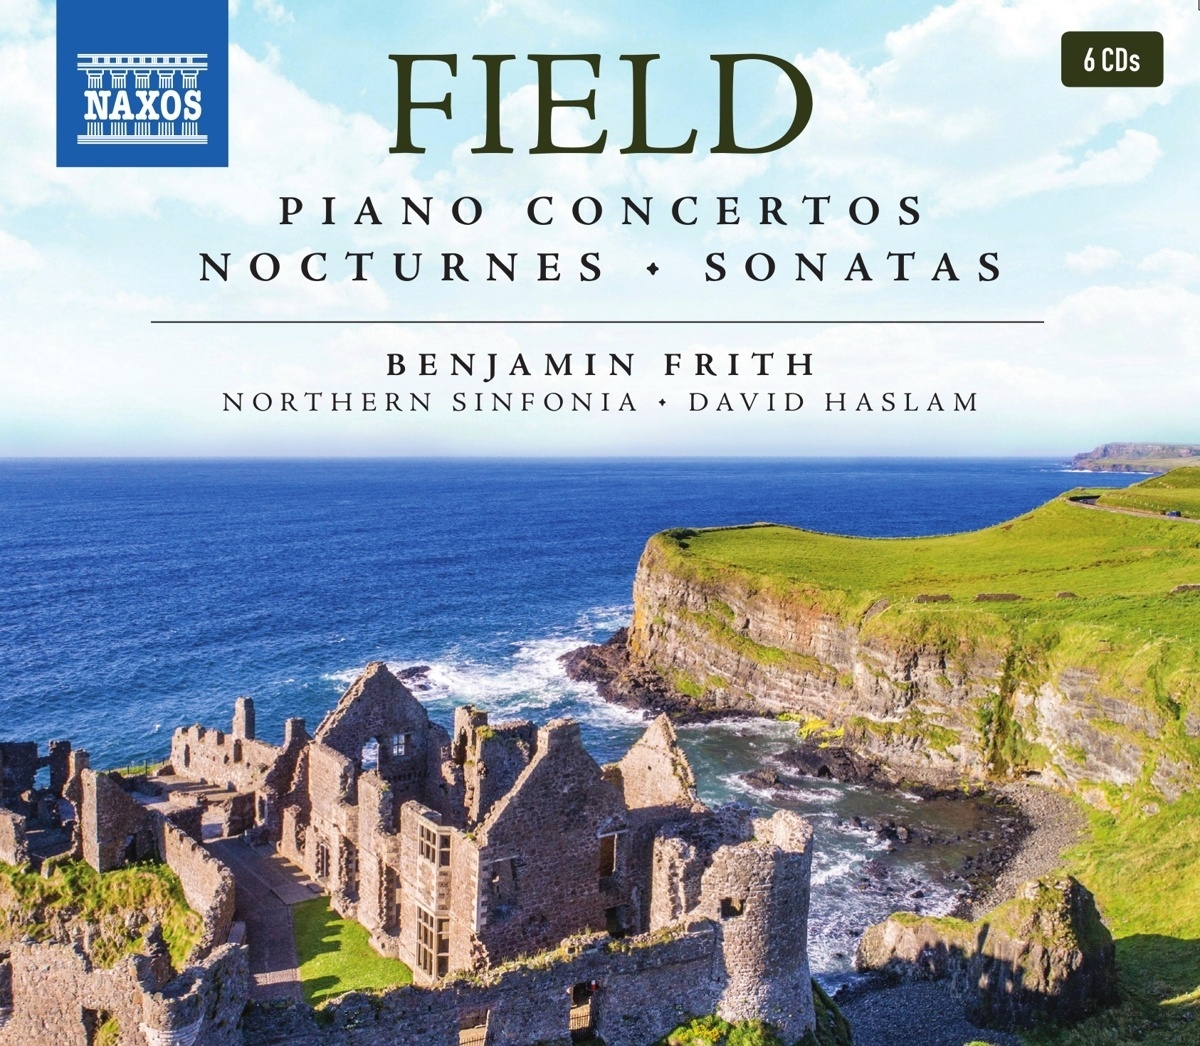 Klavierkonzerte Nocturnes Sonaten - Benjamin Frith  David Haslam  Northern Sinfonia. (CD)